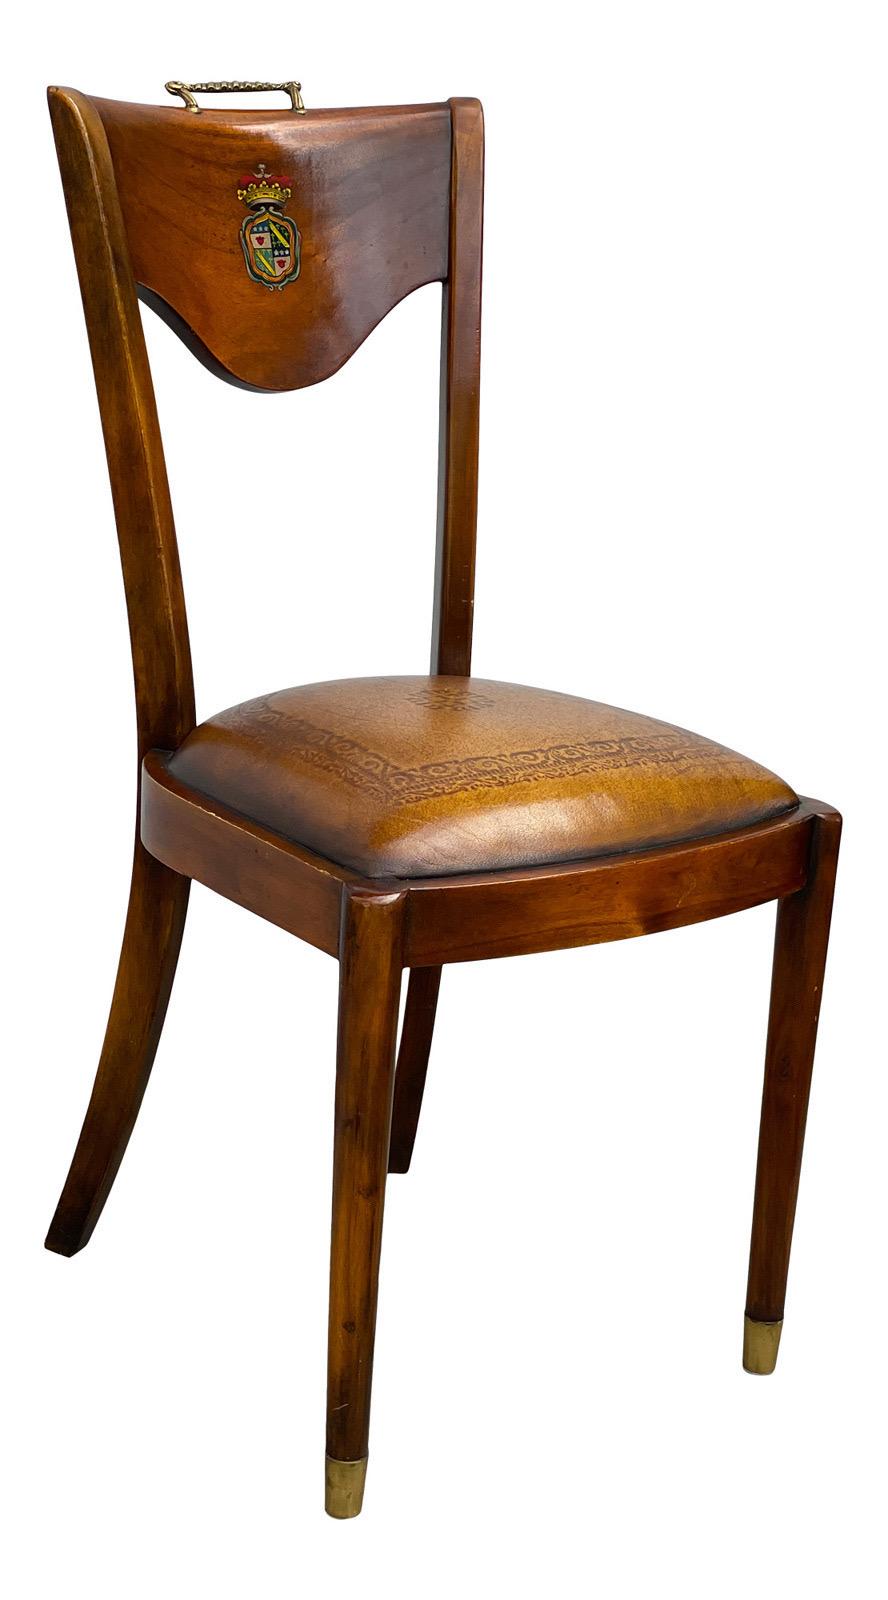 Stunning side chair by Ralph Lauren.